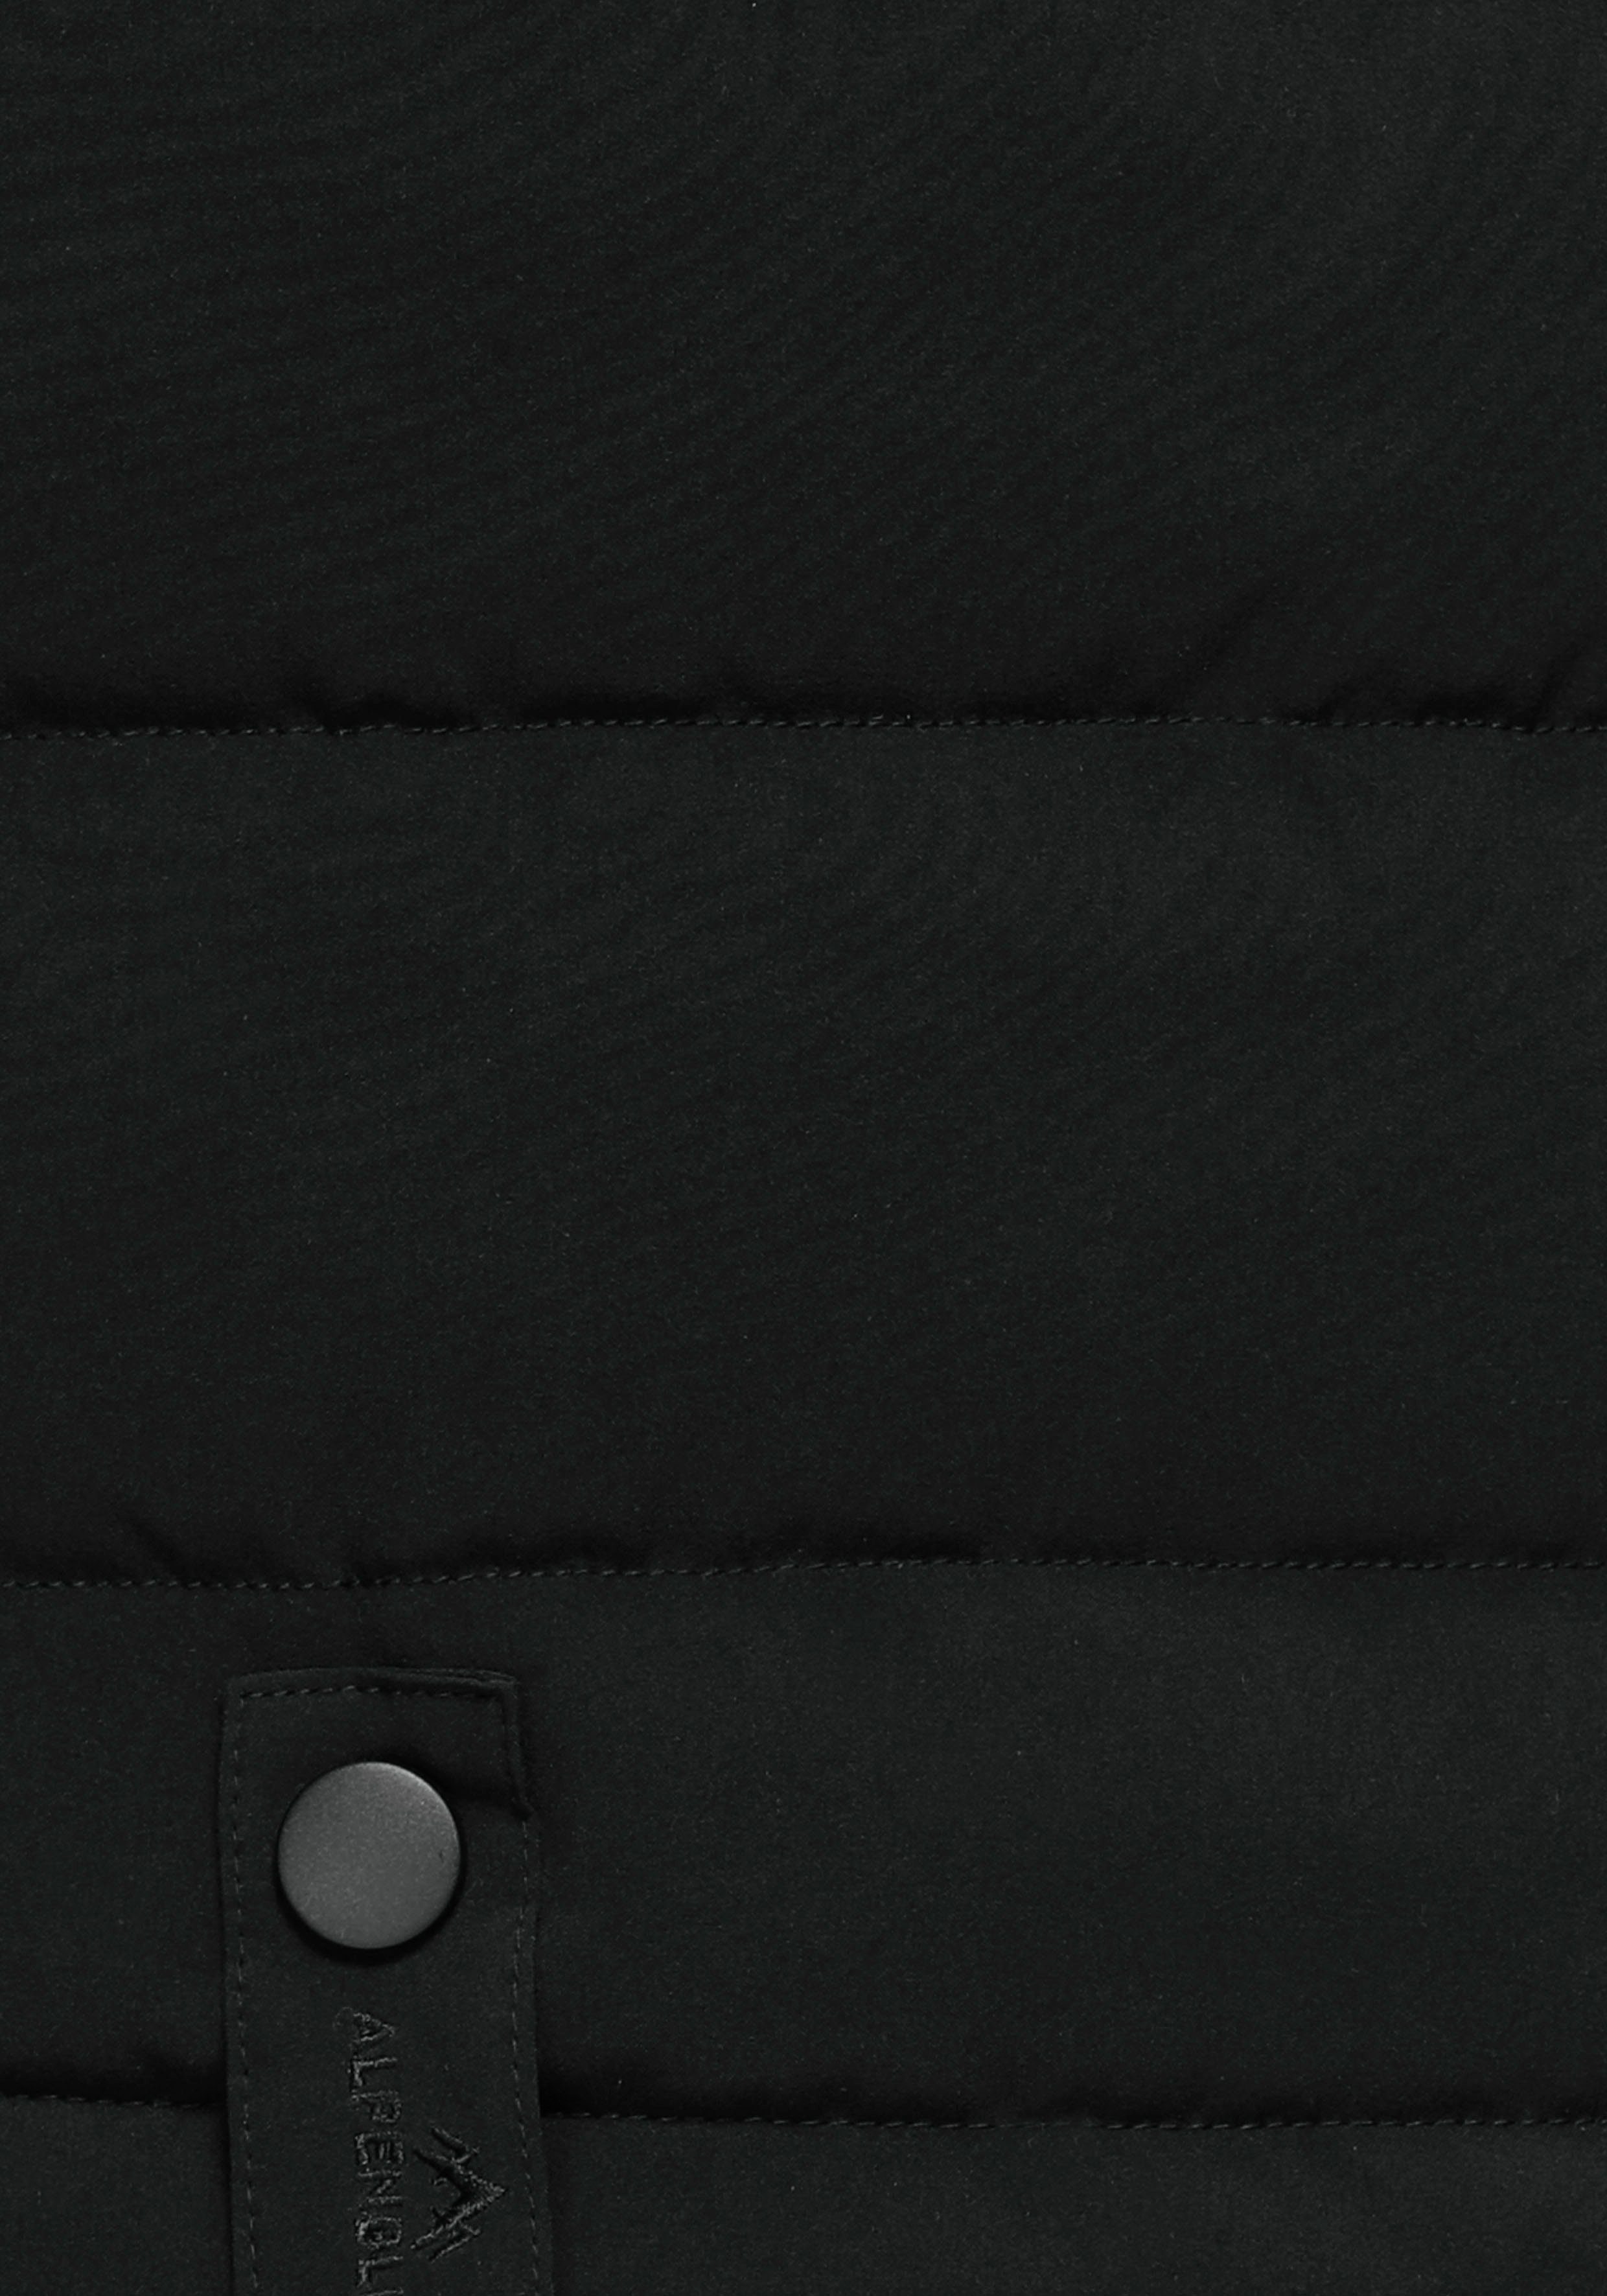 ALPENBLITZ Steppmantel Oslo & Markenprägung dem abnehmbarer auf nachhaltigem long aus Mantel (Jacke Material) Kuschel-Kapuze mit Gürtel black